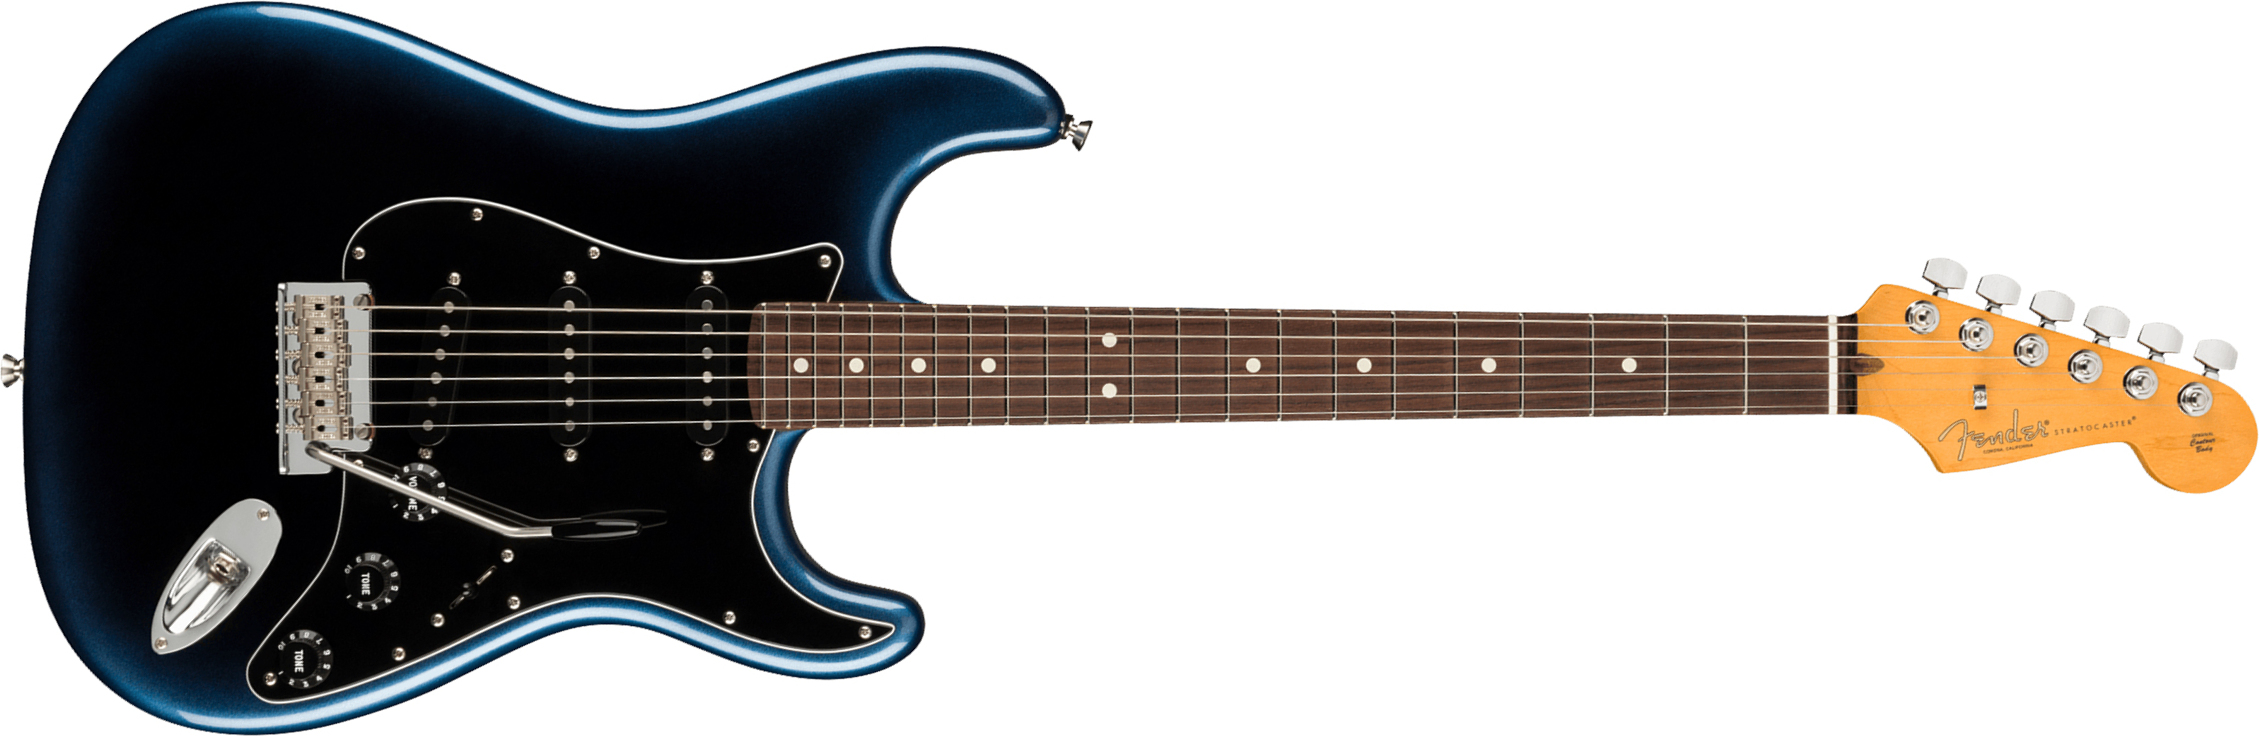 Fender Strat American Professional Ii Usa Rw - Dark Night - Str shape electric guitar - Main picture